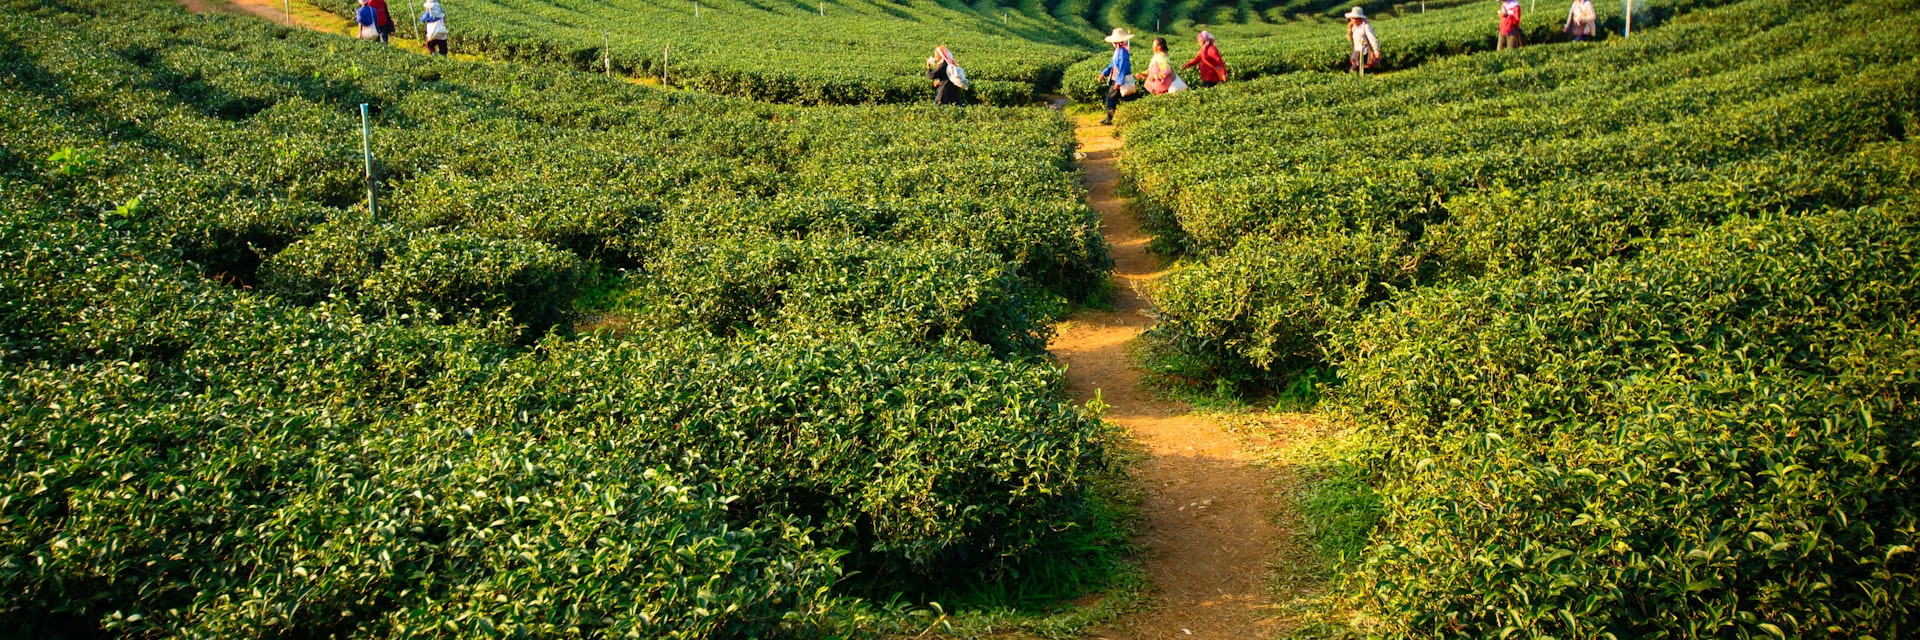 Tea plantation workers walk through a plantation.